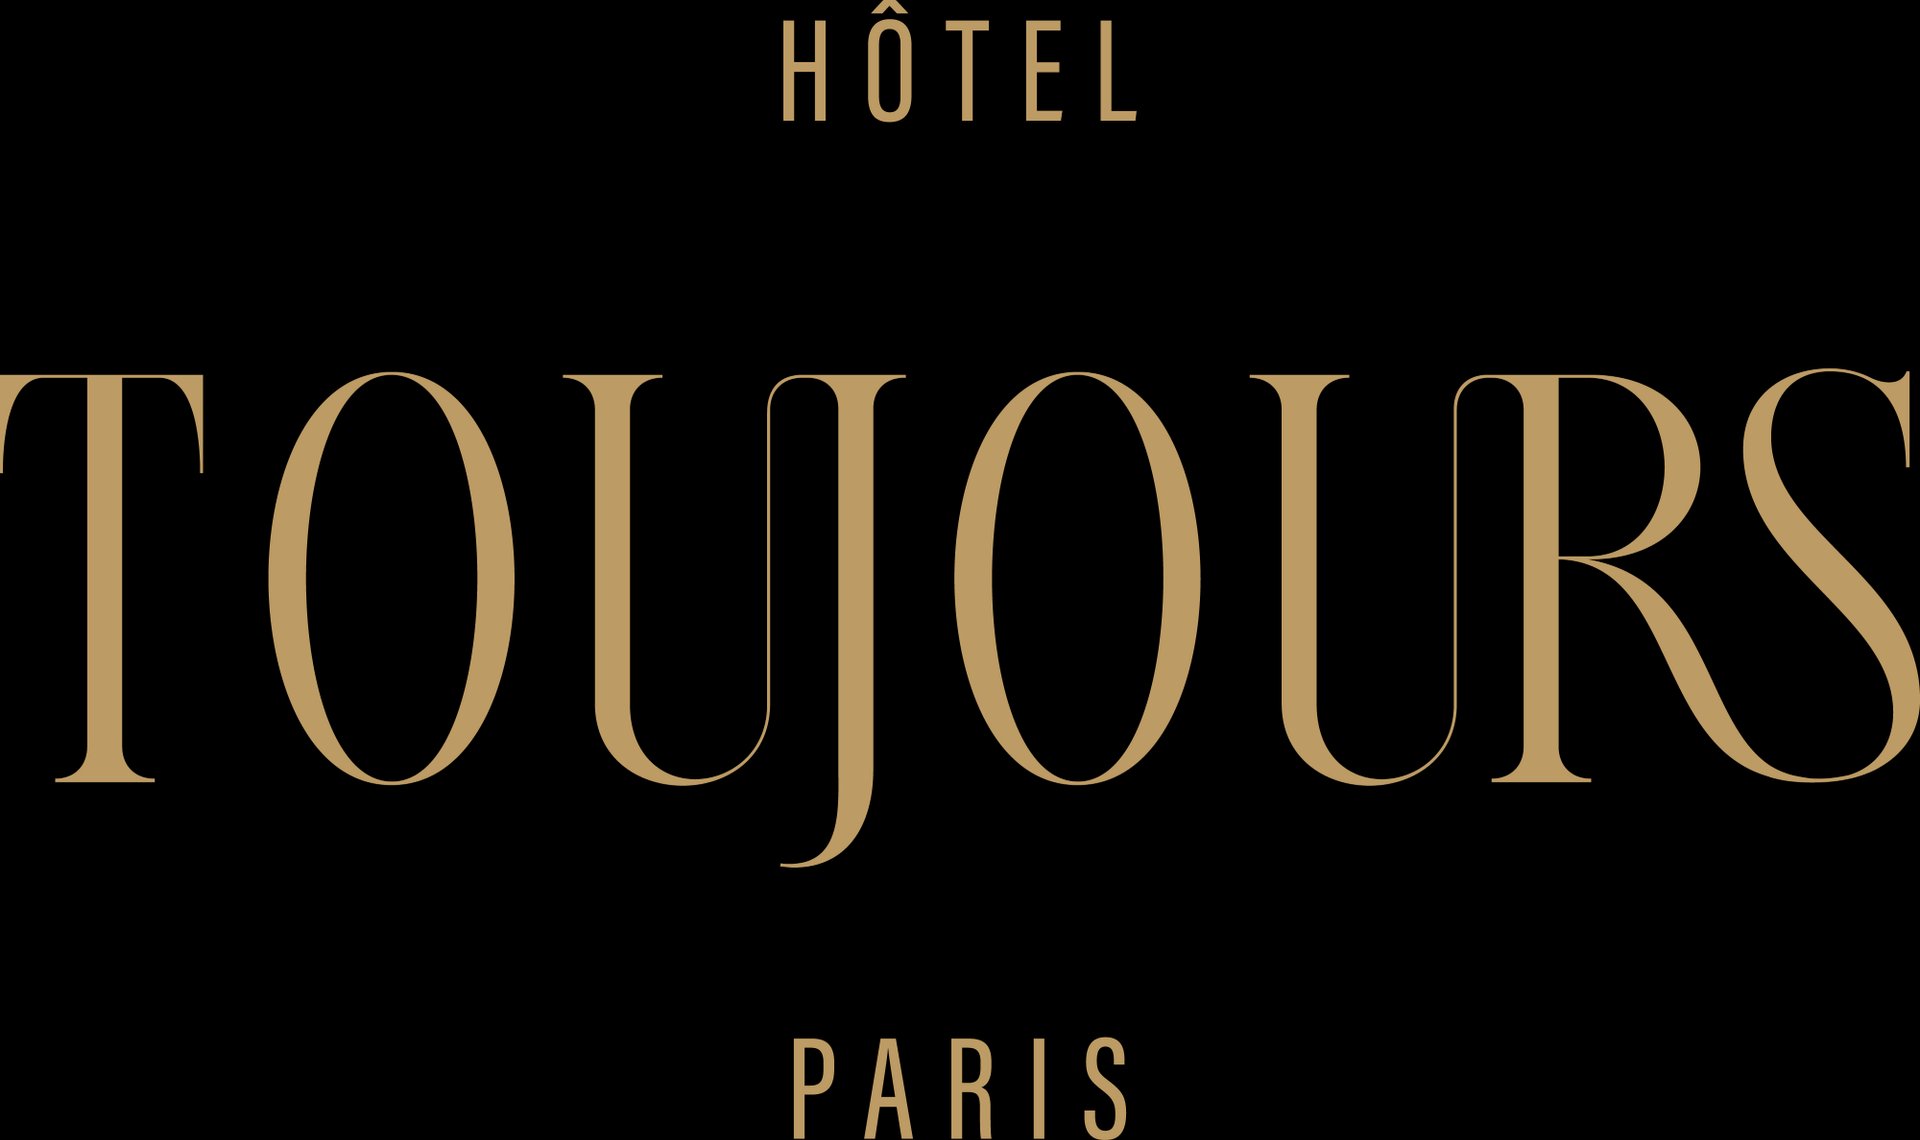 4 star luxury hotel Paris